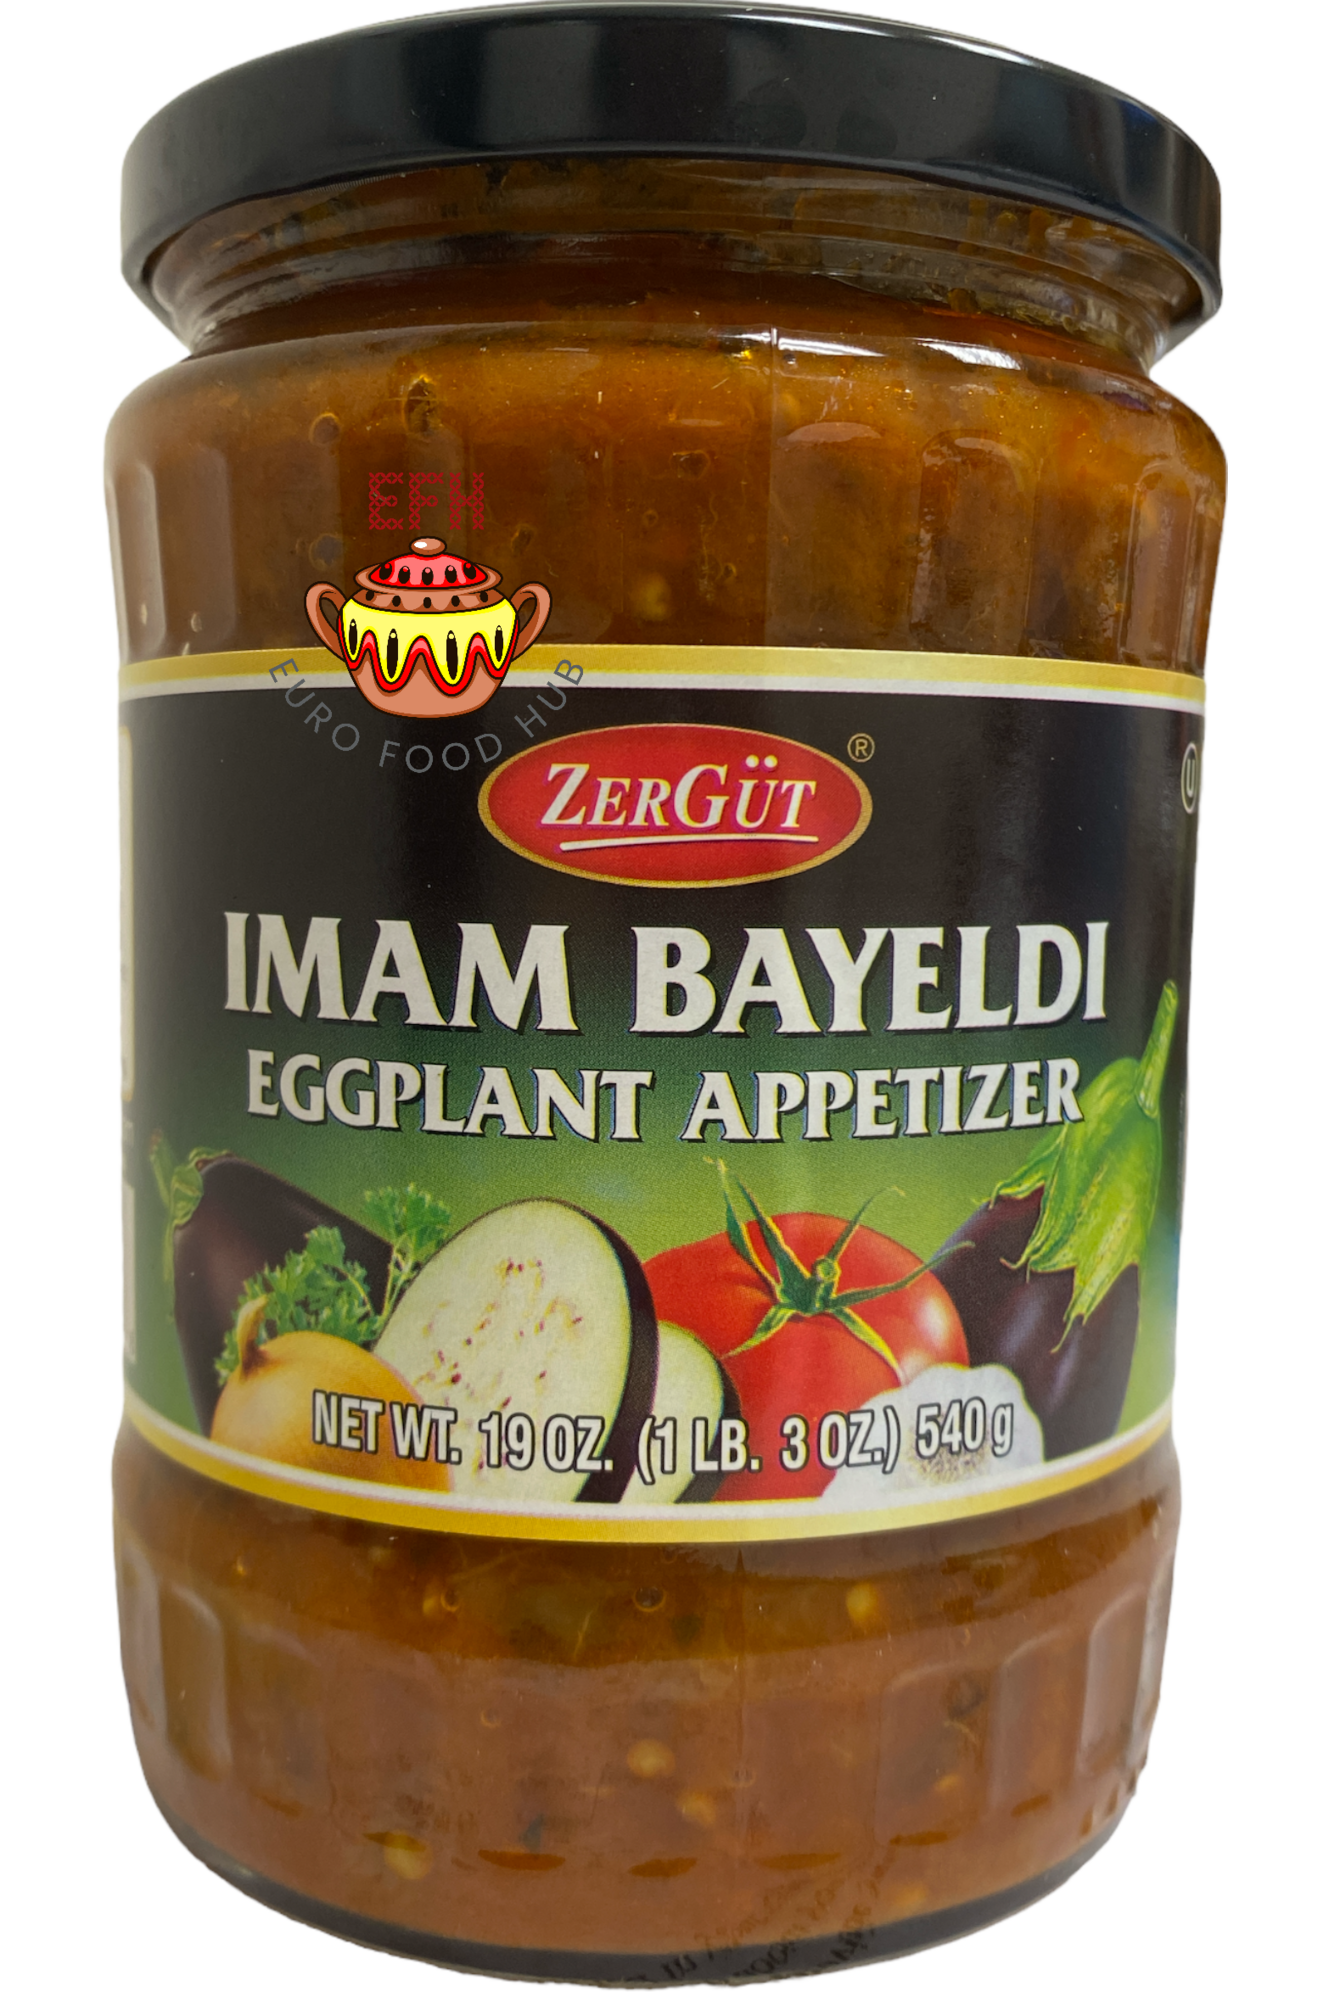 ZerGut IMAM BAYELDI - Eggplant Appetizer - 19oz